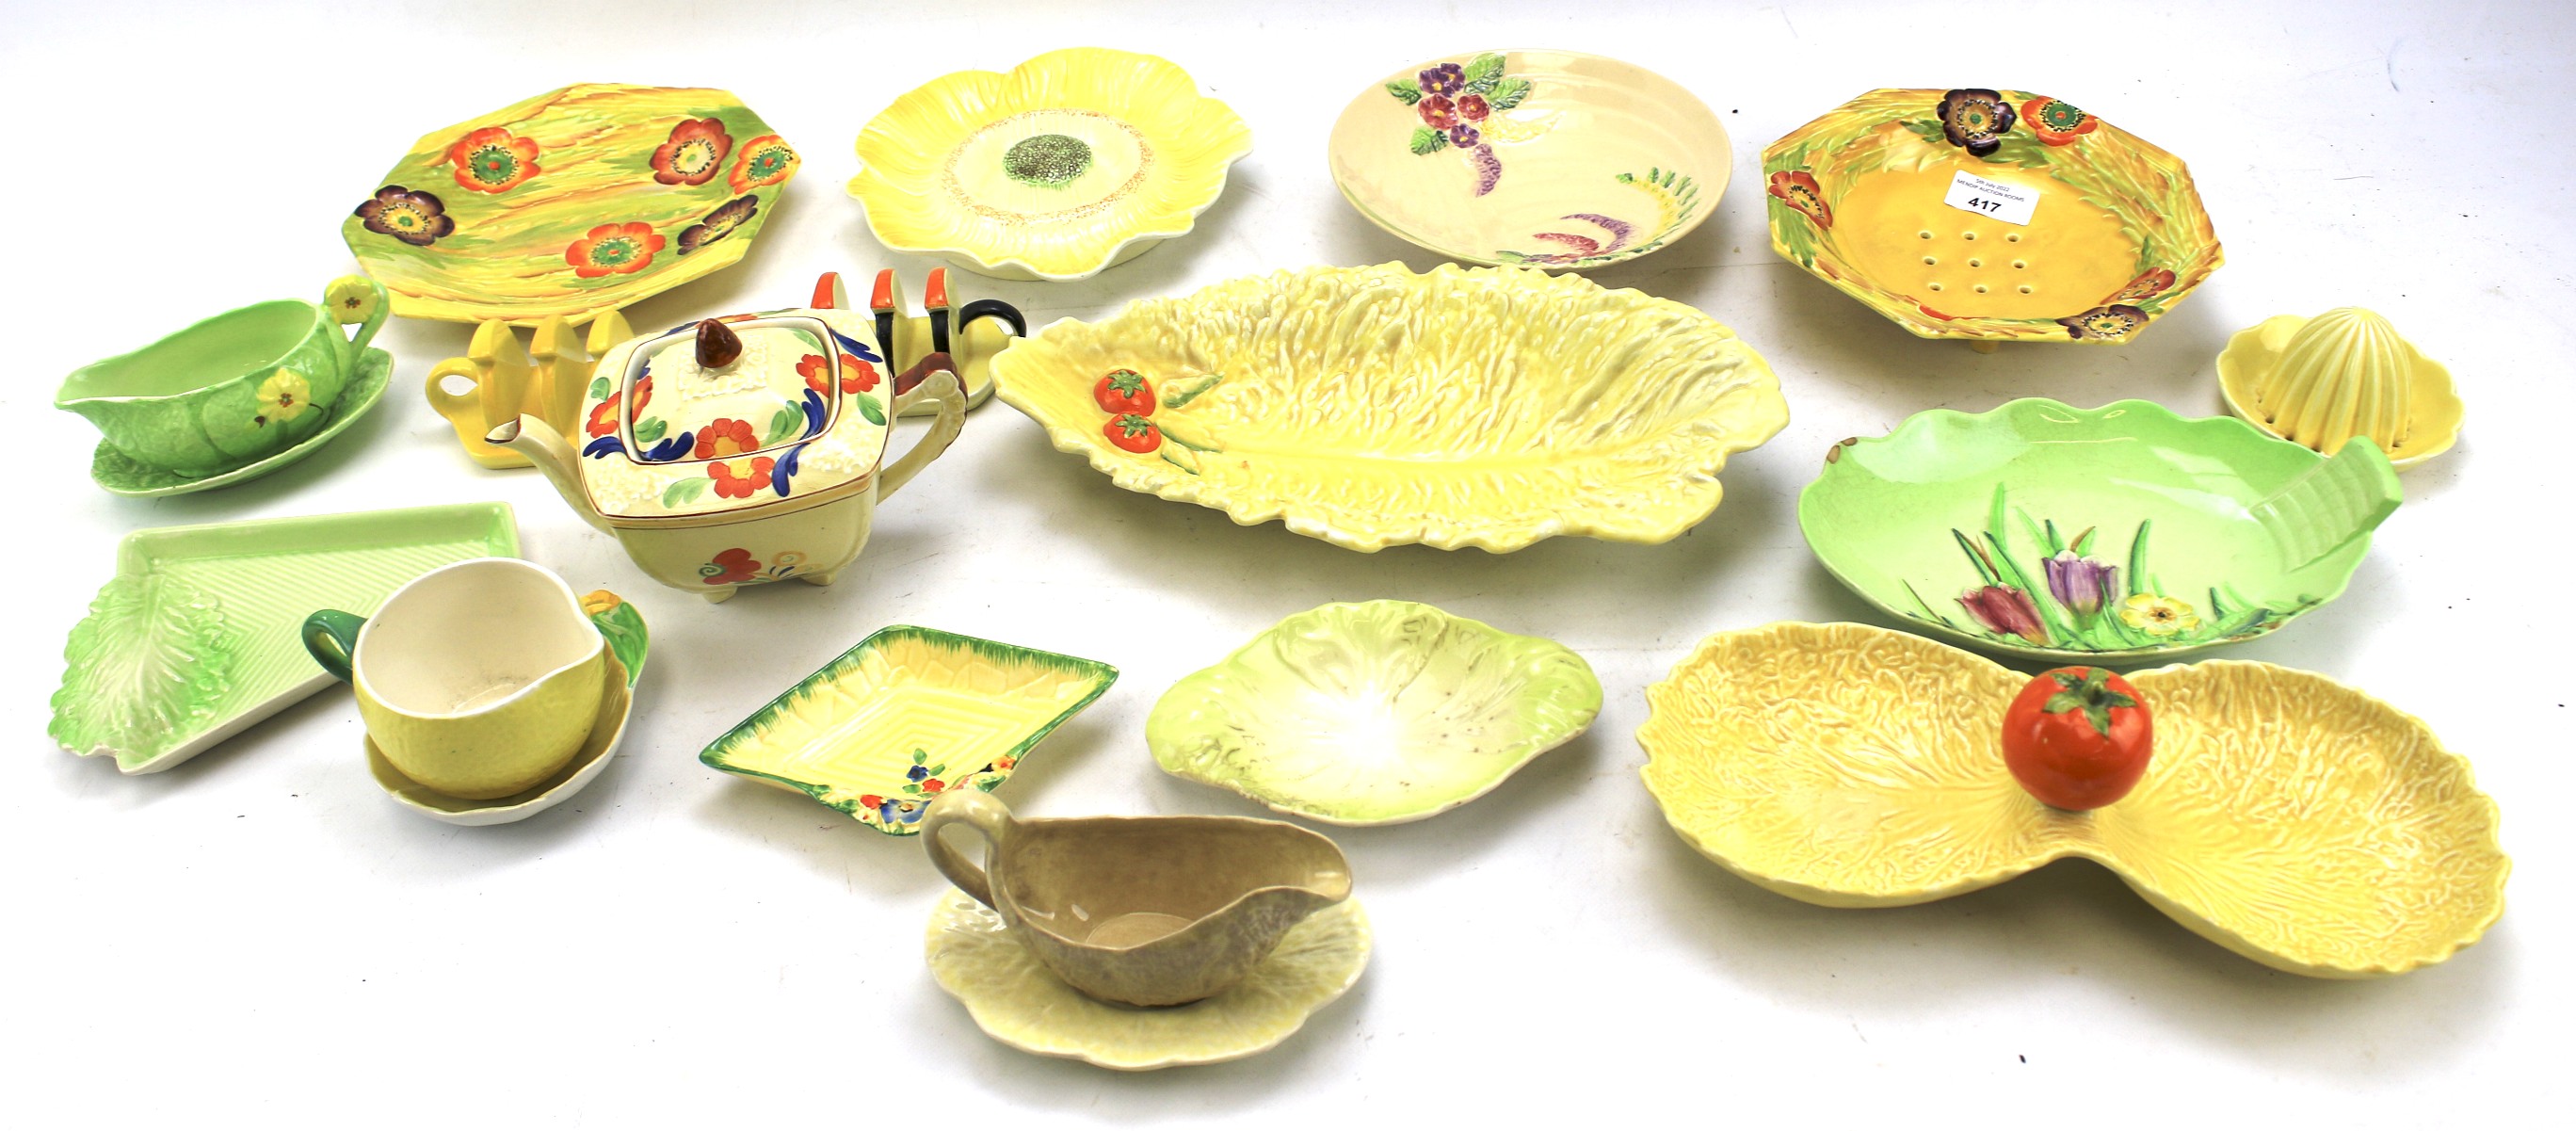 An assortment of Carlton Ware and 20th century ceramics.